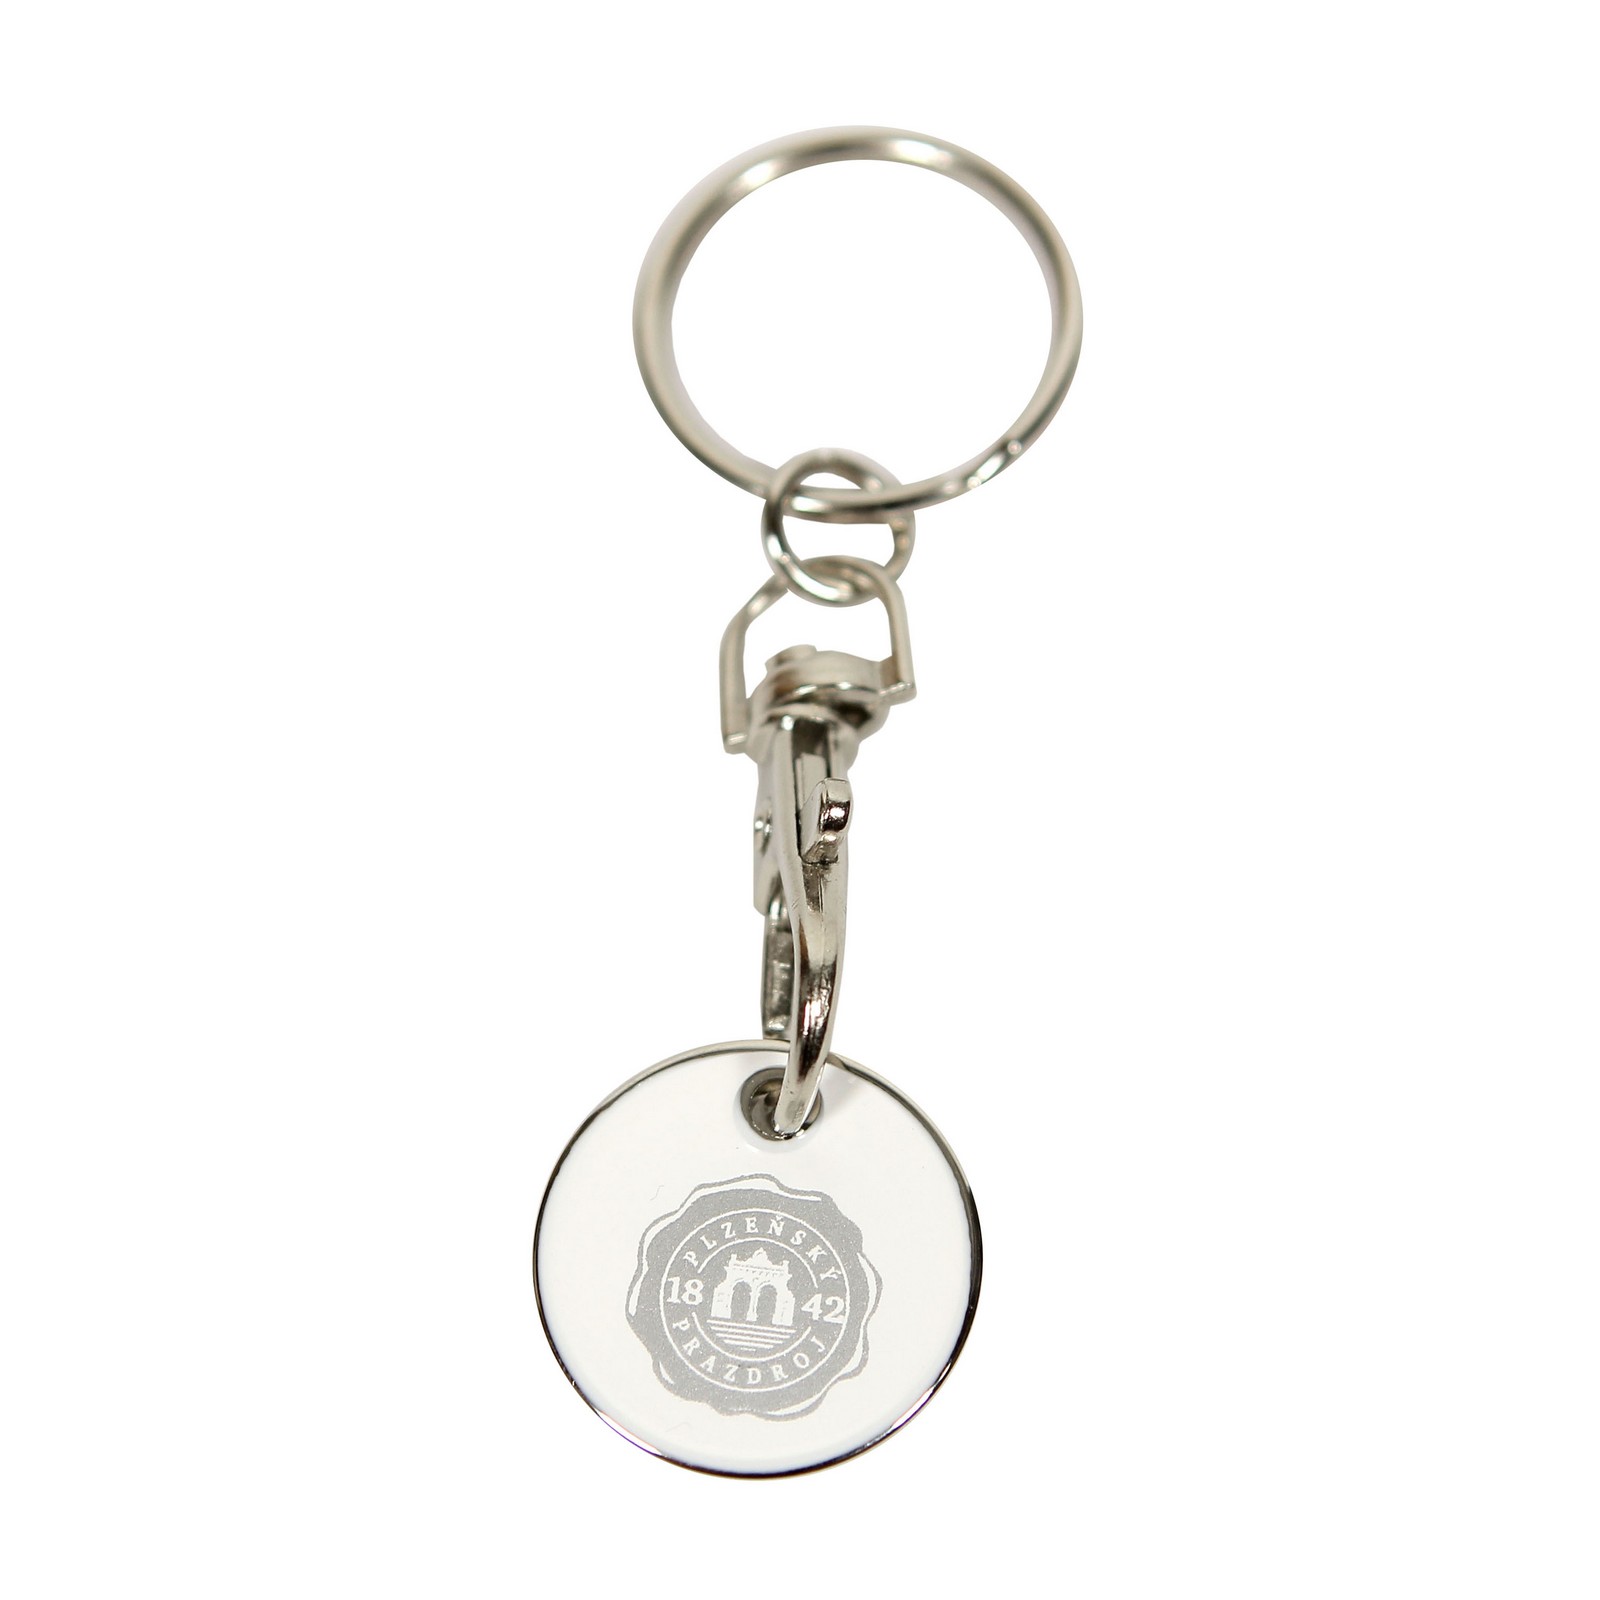 Pilsner Urquell chain key